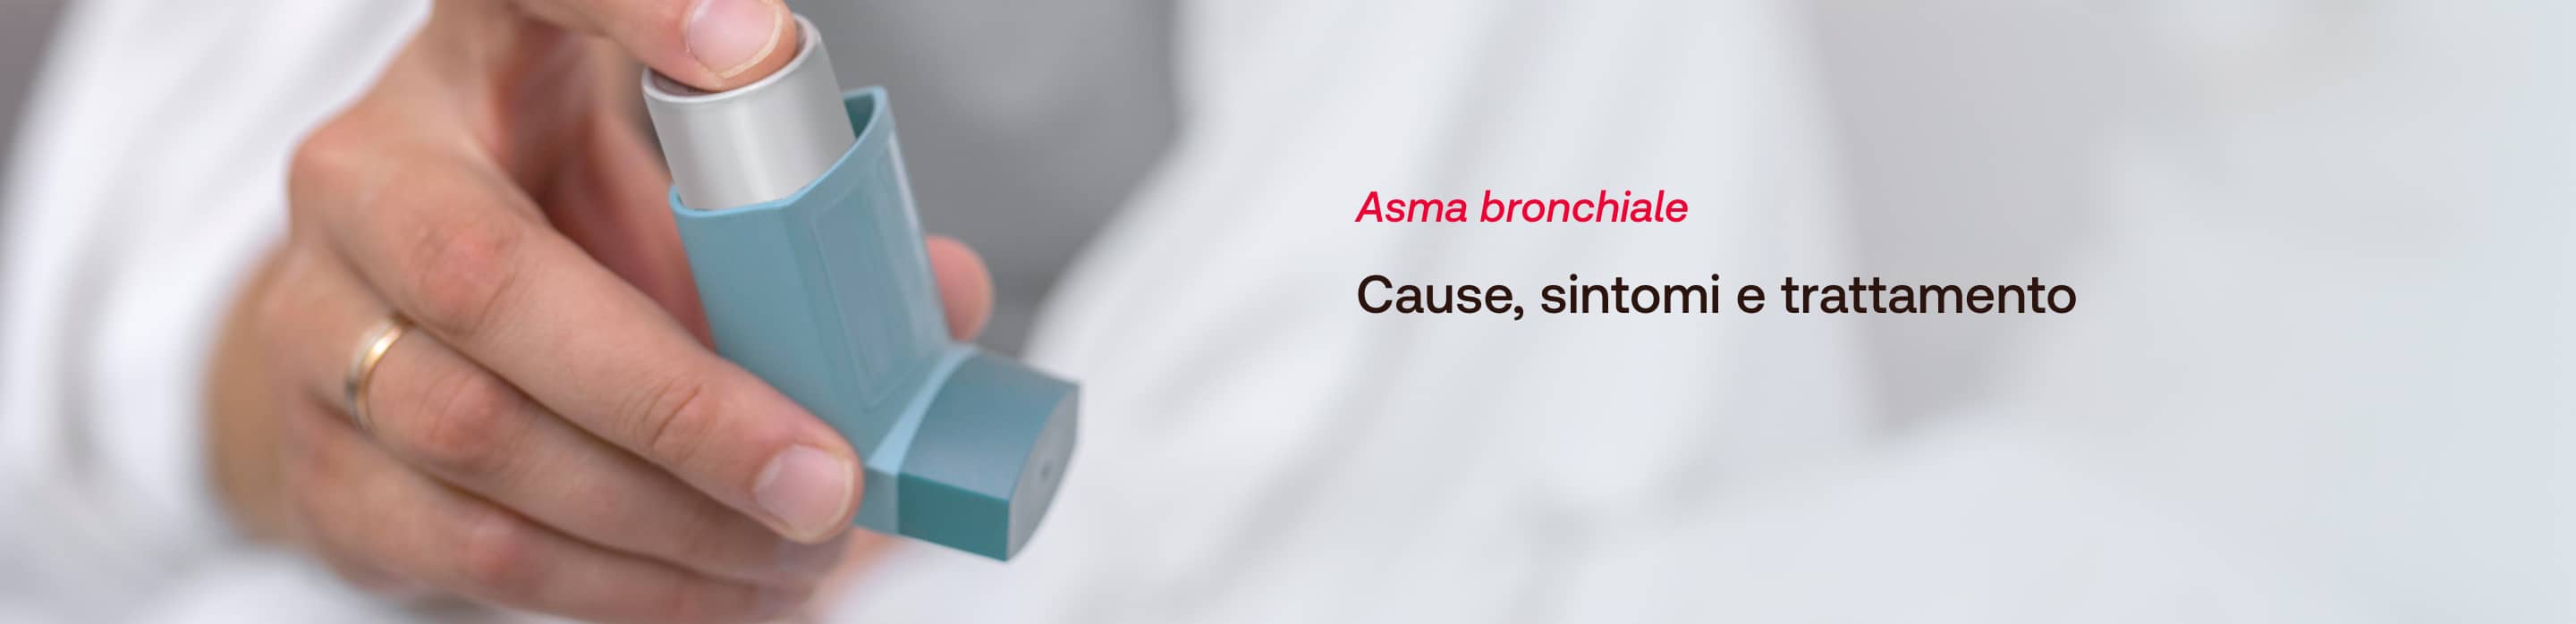 Asma bronchiale - GUIDA